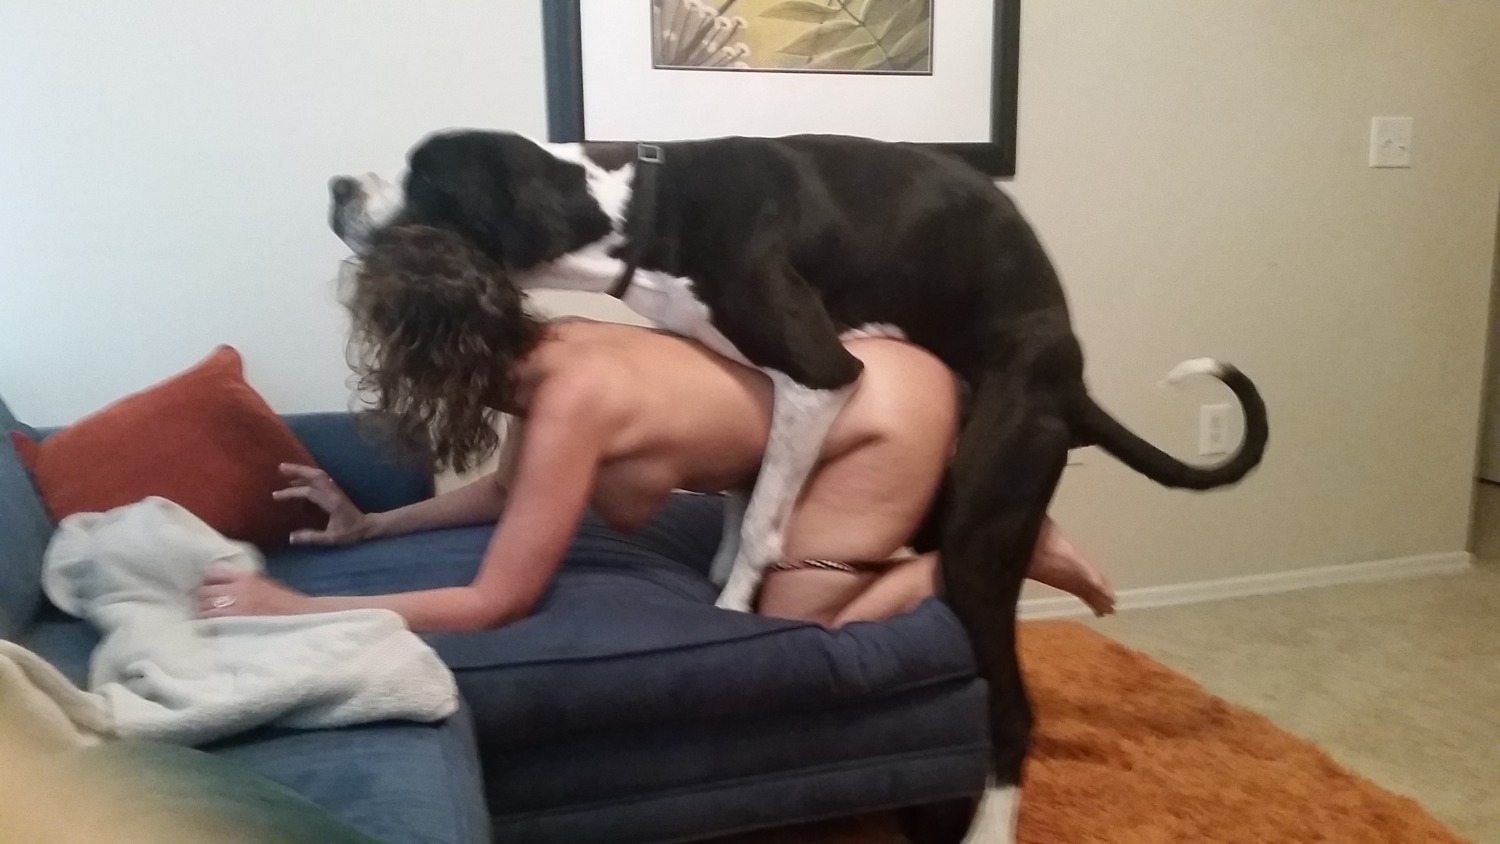 Dog fuck women threesome